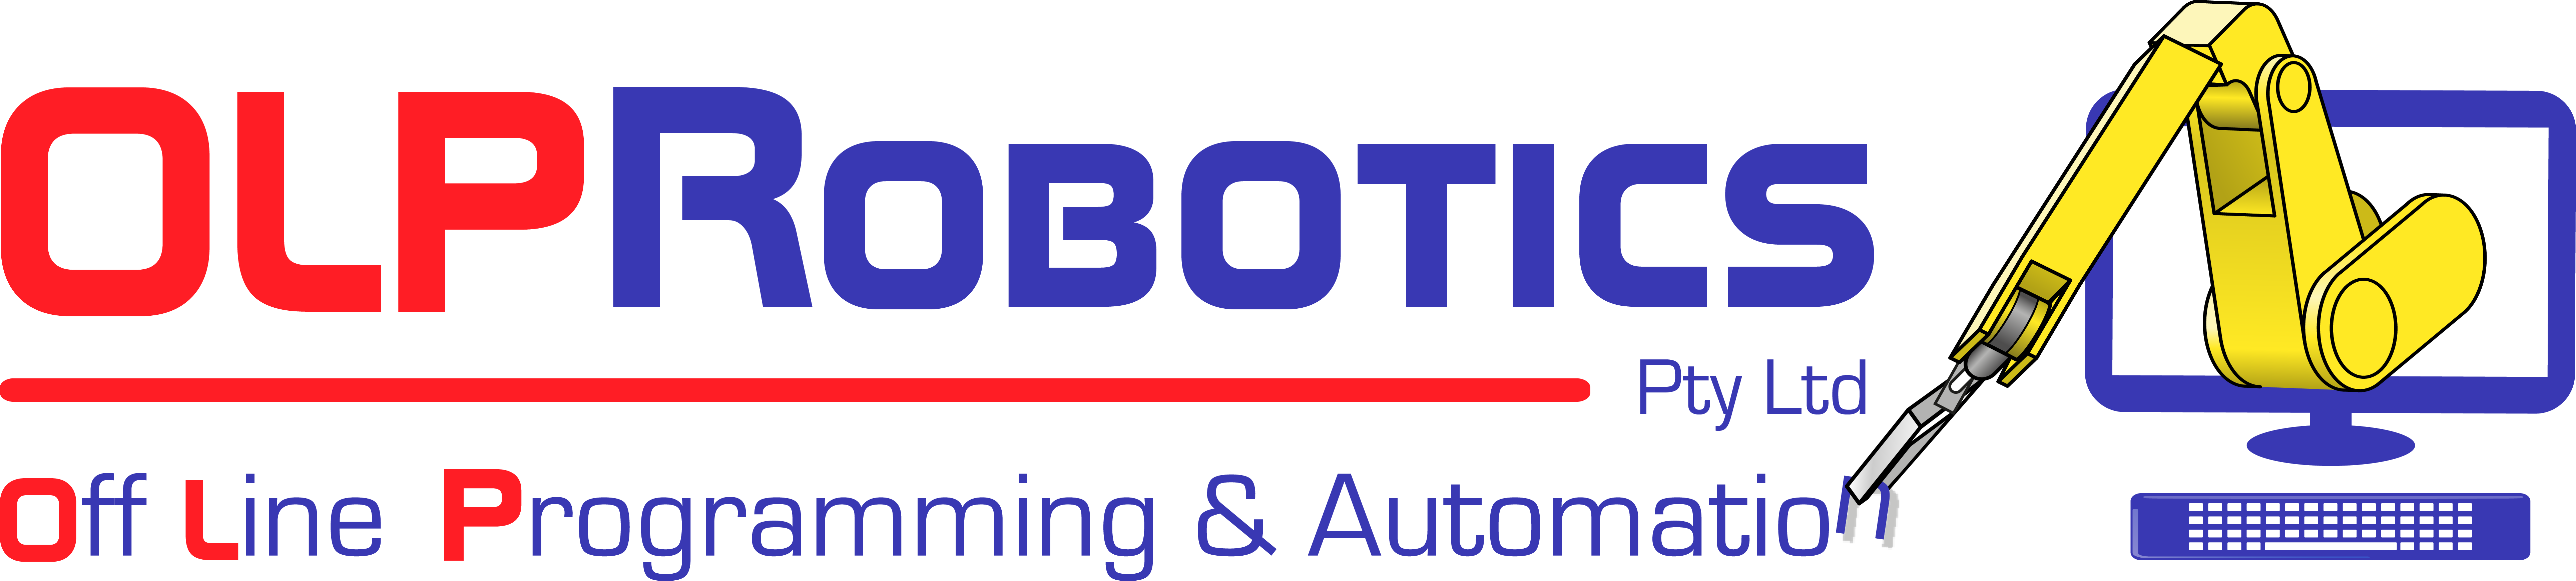 OLP Robotics logo